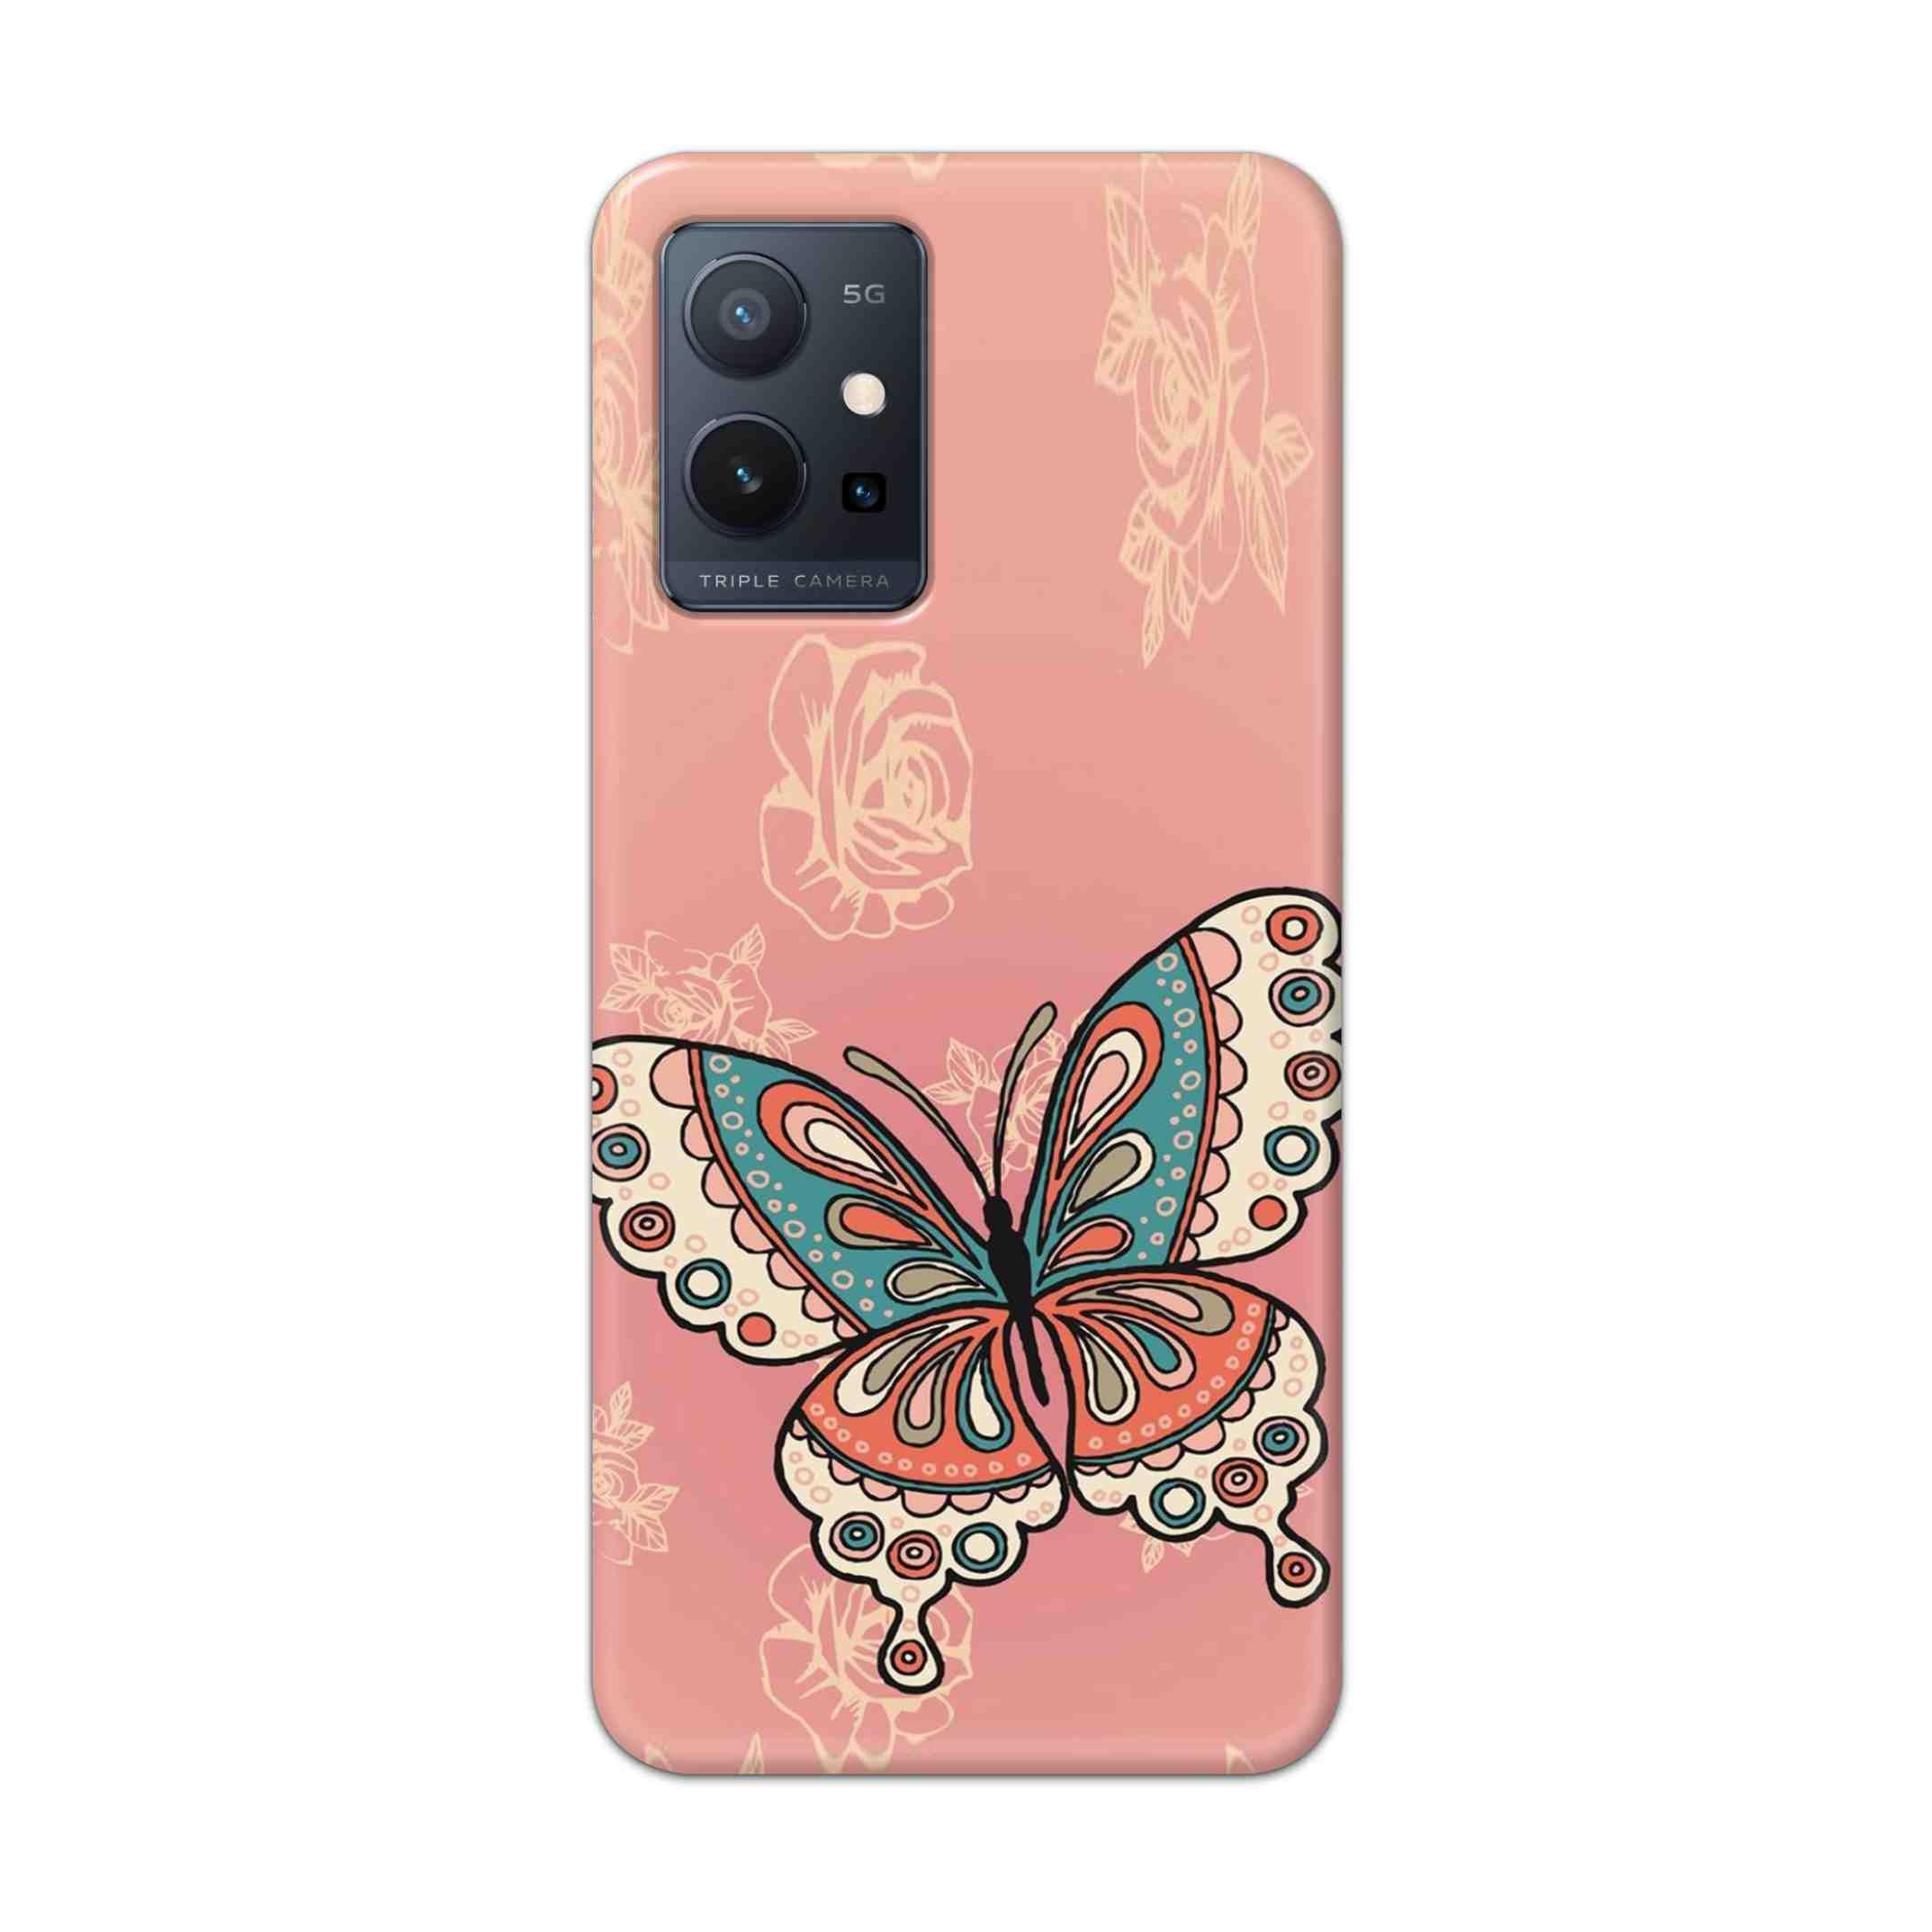 Buy Butterfly Hard Back Mobile Phone Case Cover For Vivo T1 5G Online